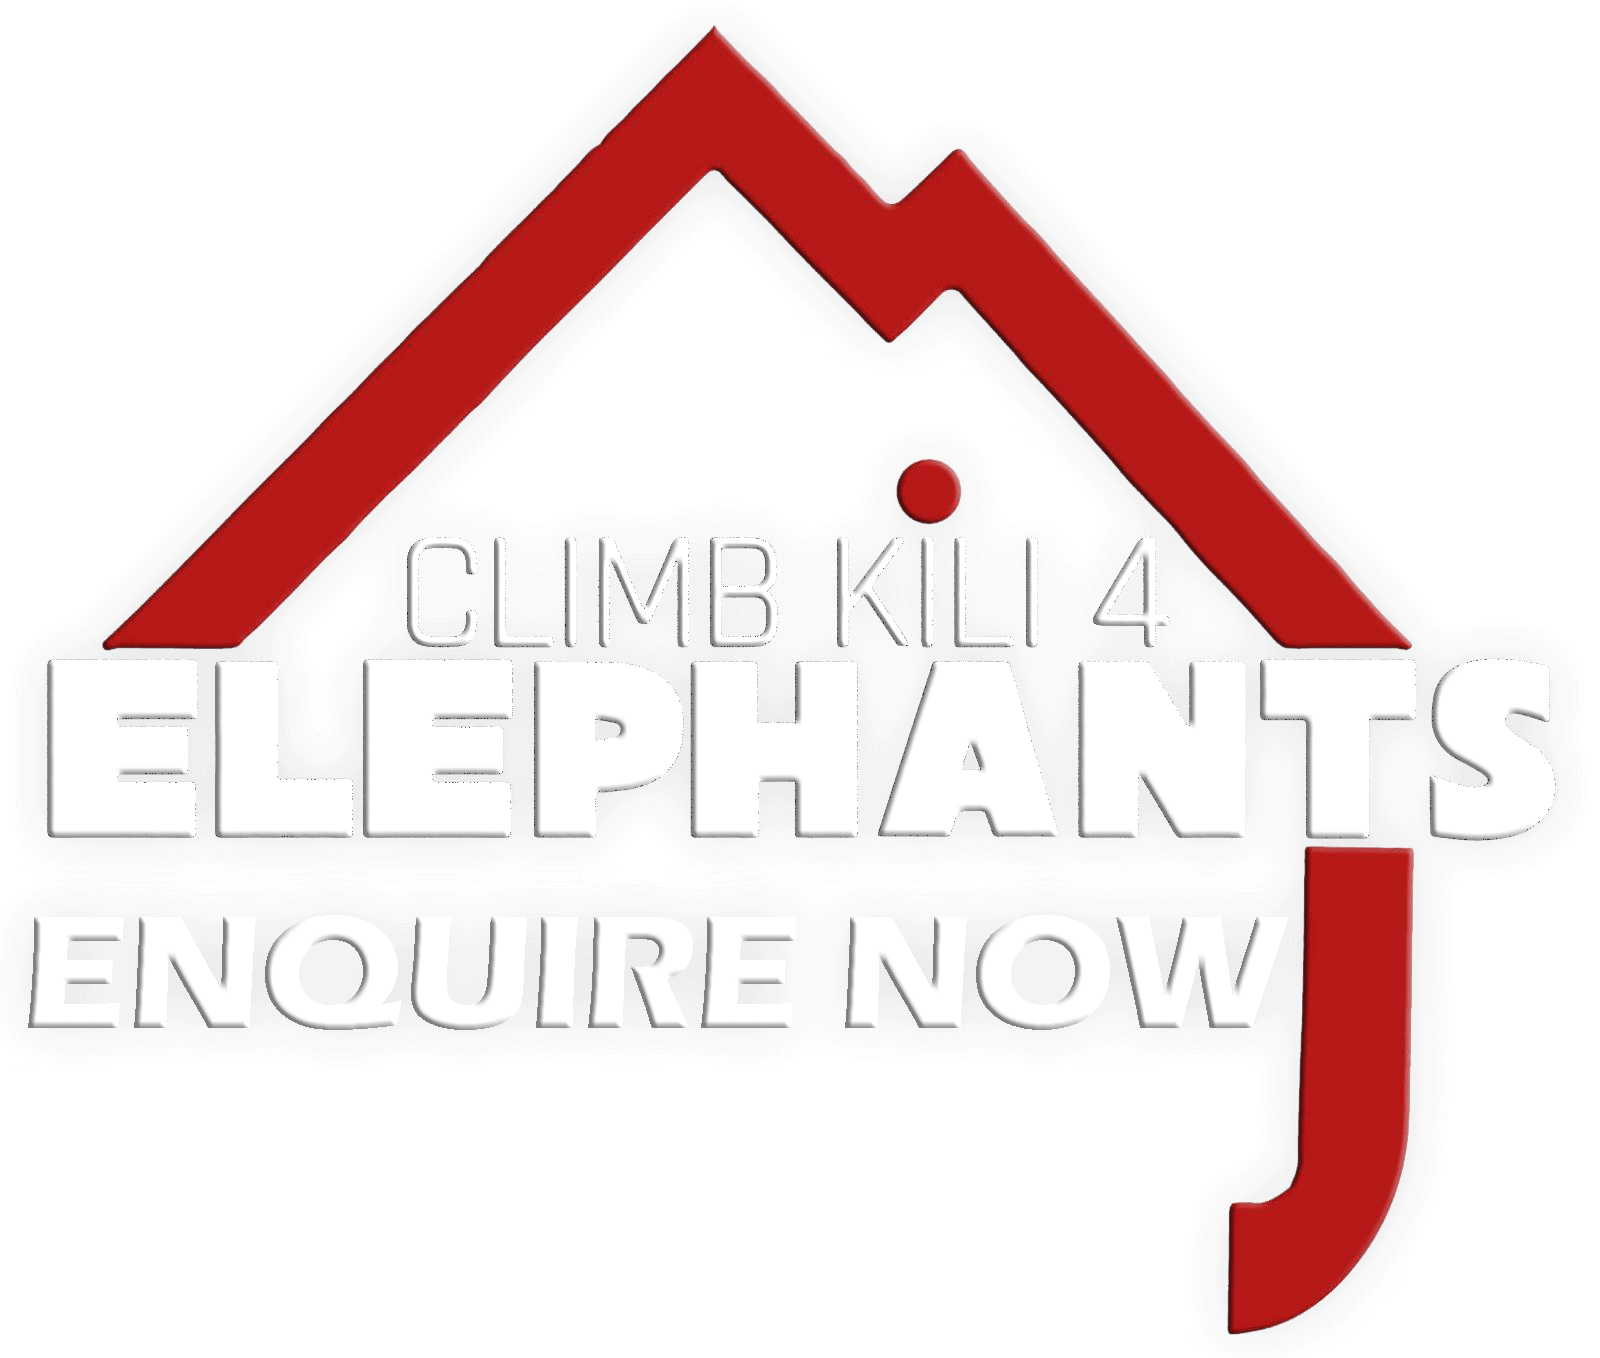 CLIMB KILI 4 ELEPHANTS